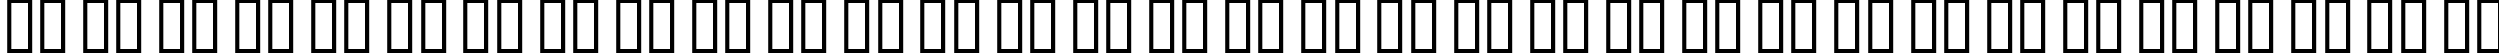 Пример написания русского алфавита шрифтом Benegraphic